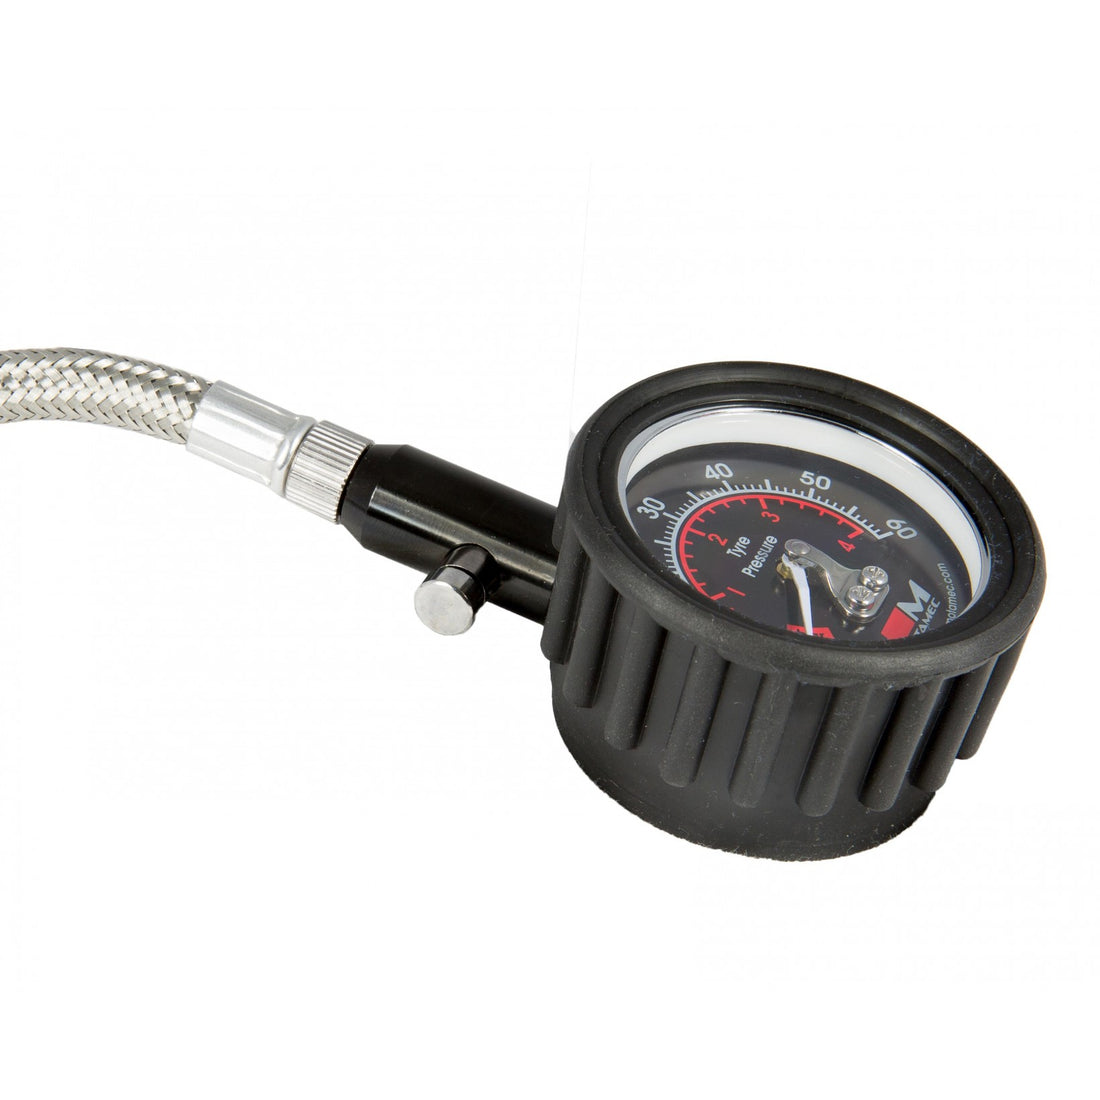 motorsport tyre pressure gauge flexible hose analogue dial 0-60 psi